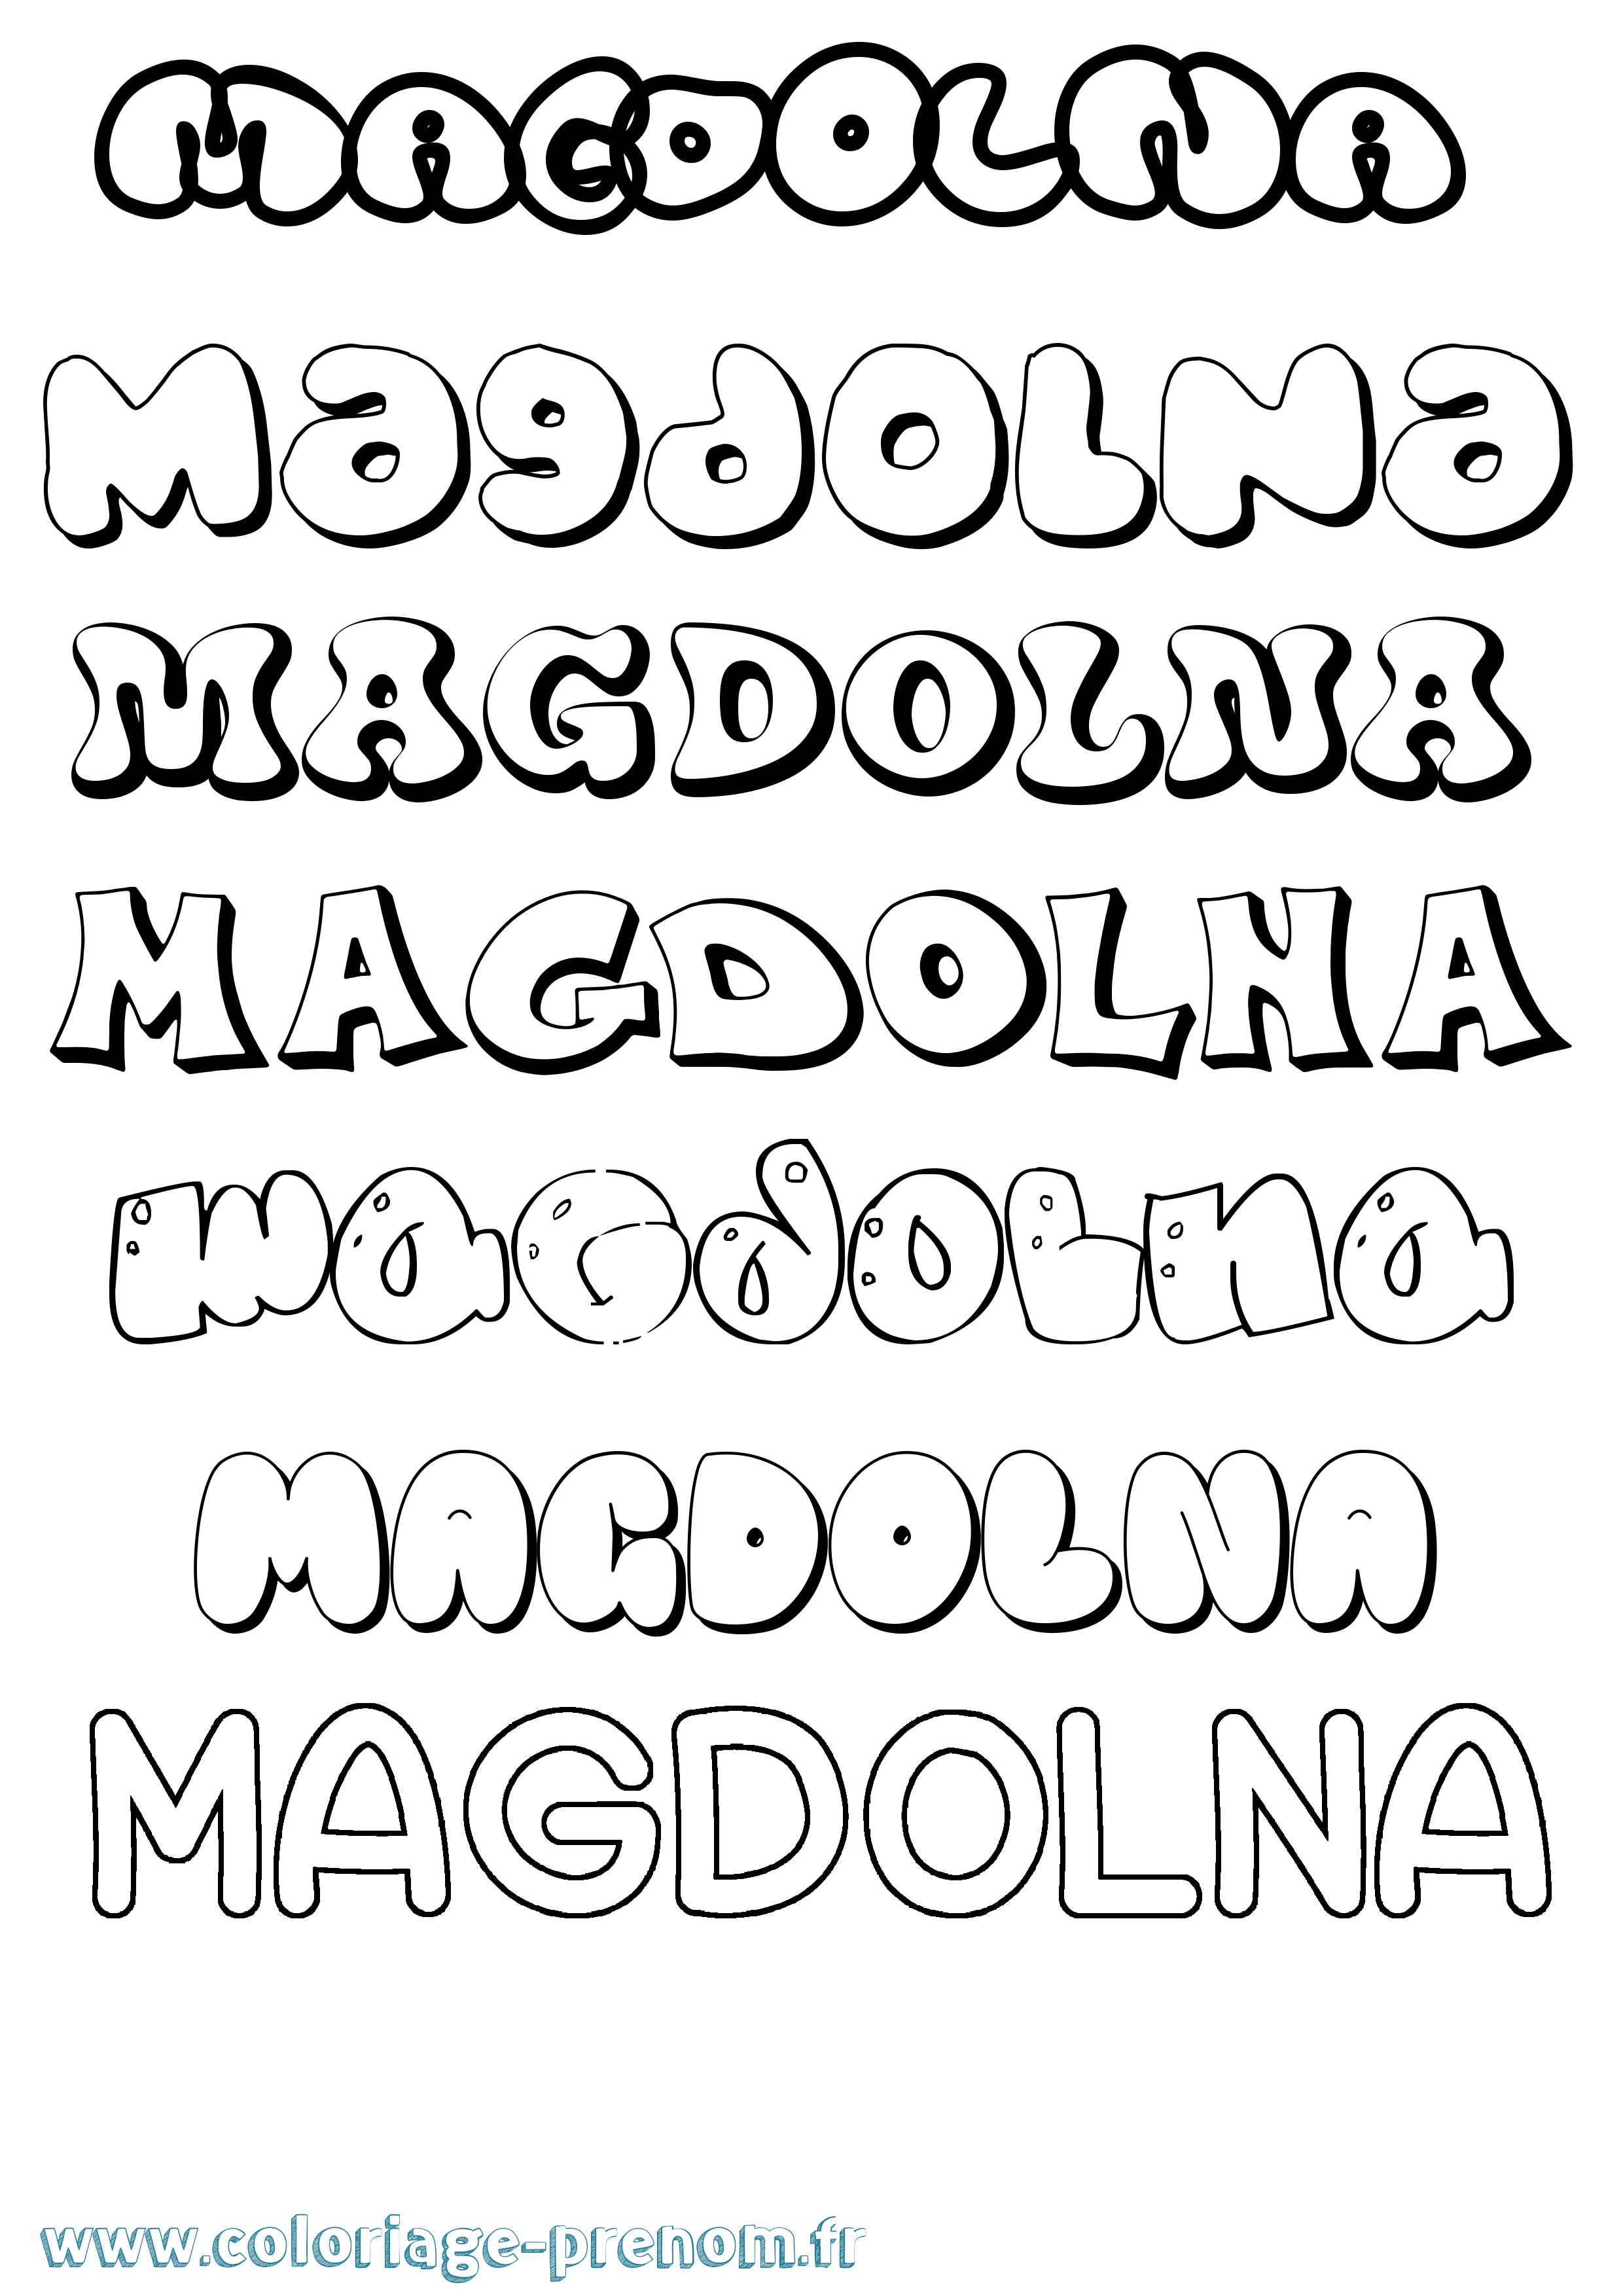 Coloriage prénom Magdolna Bubble